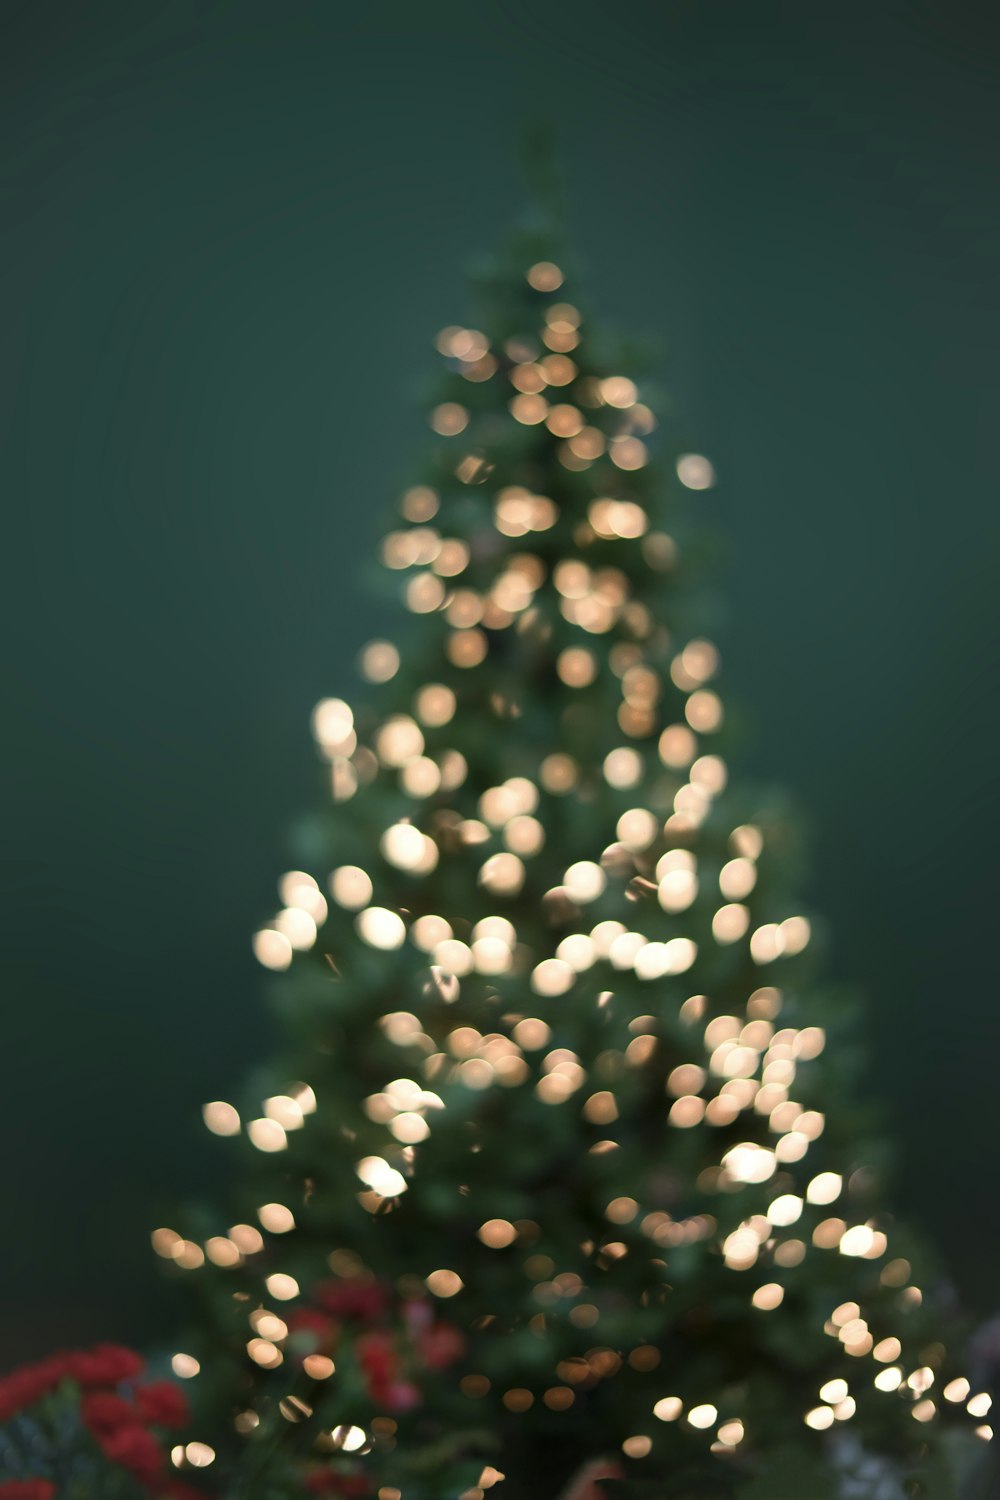 Boke Photography Of Christmas Tree And String Lights Photo Free Christmas Image On Unsplash